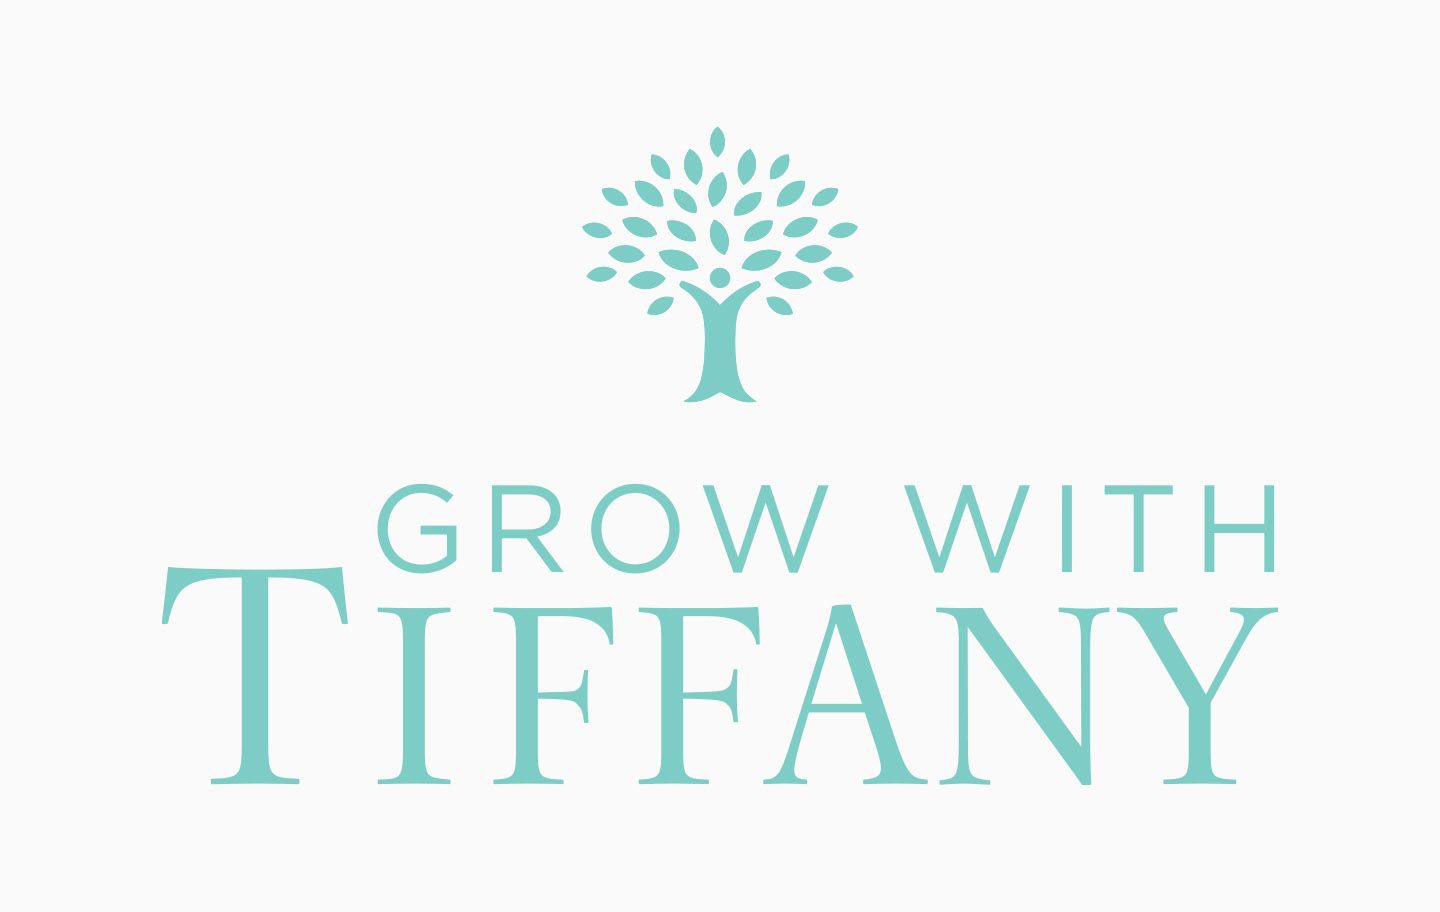 Tiffany & Co.: Culture